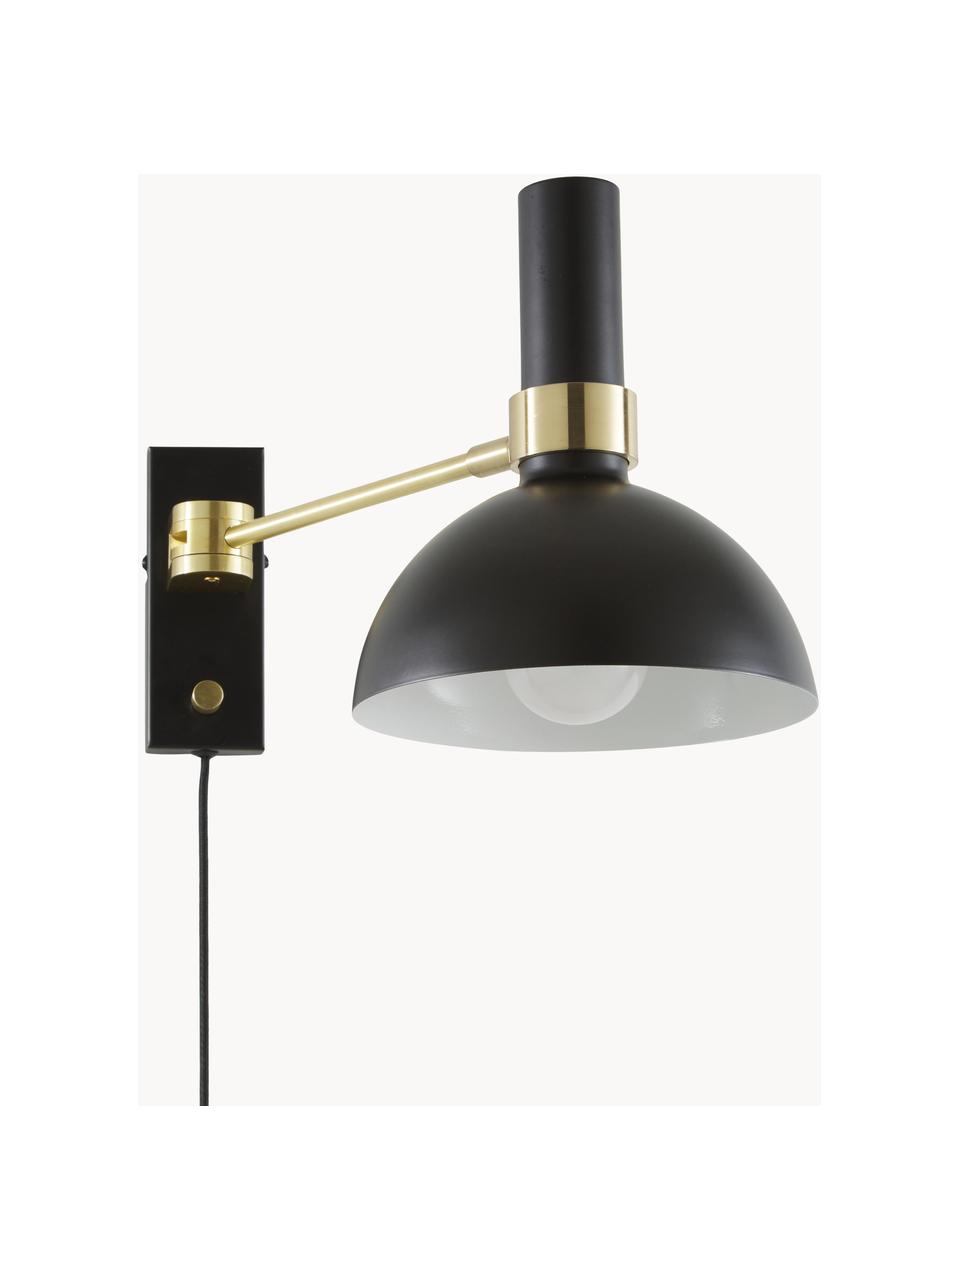 Grote dimbare wandlamp Larry met stekker, Lampenkap: gelakt messing, Frame: messing, Zwart, goudkleurig, D 41 x H 24 cm